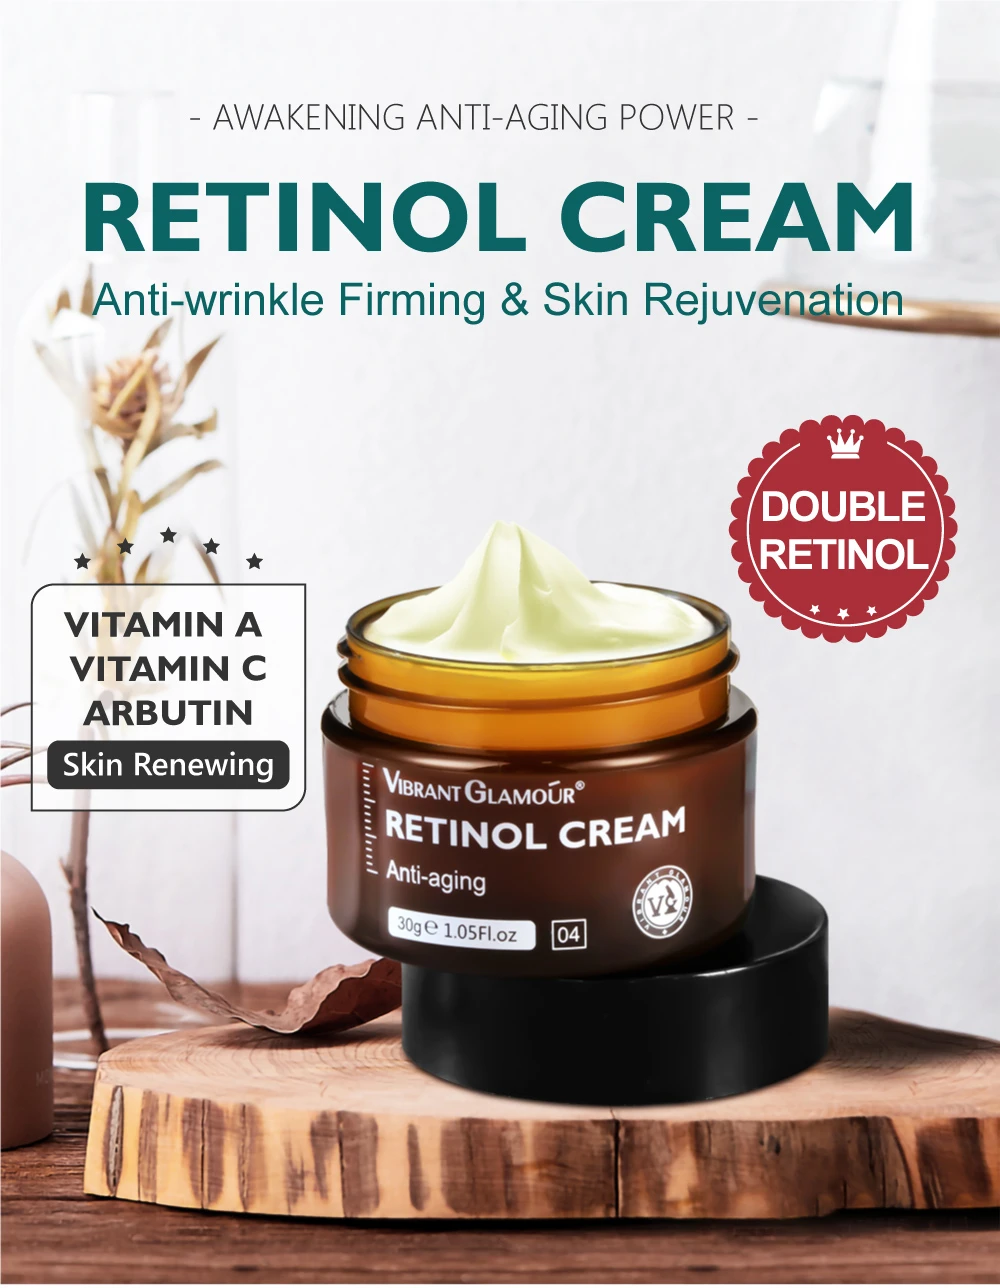 VIBRANT GLAMOUR Retinol Face Cream Anti-Aging Remove Wrinkle Firming Lifting Whitening Brightening Moisturizing Facial Skin Care